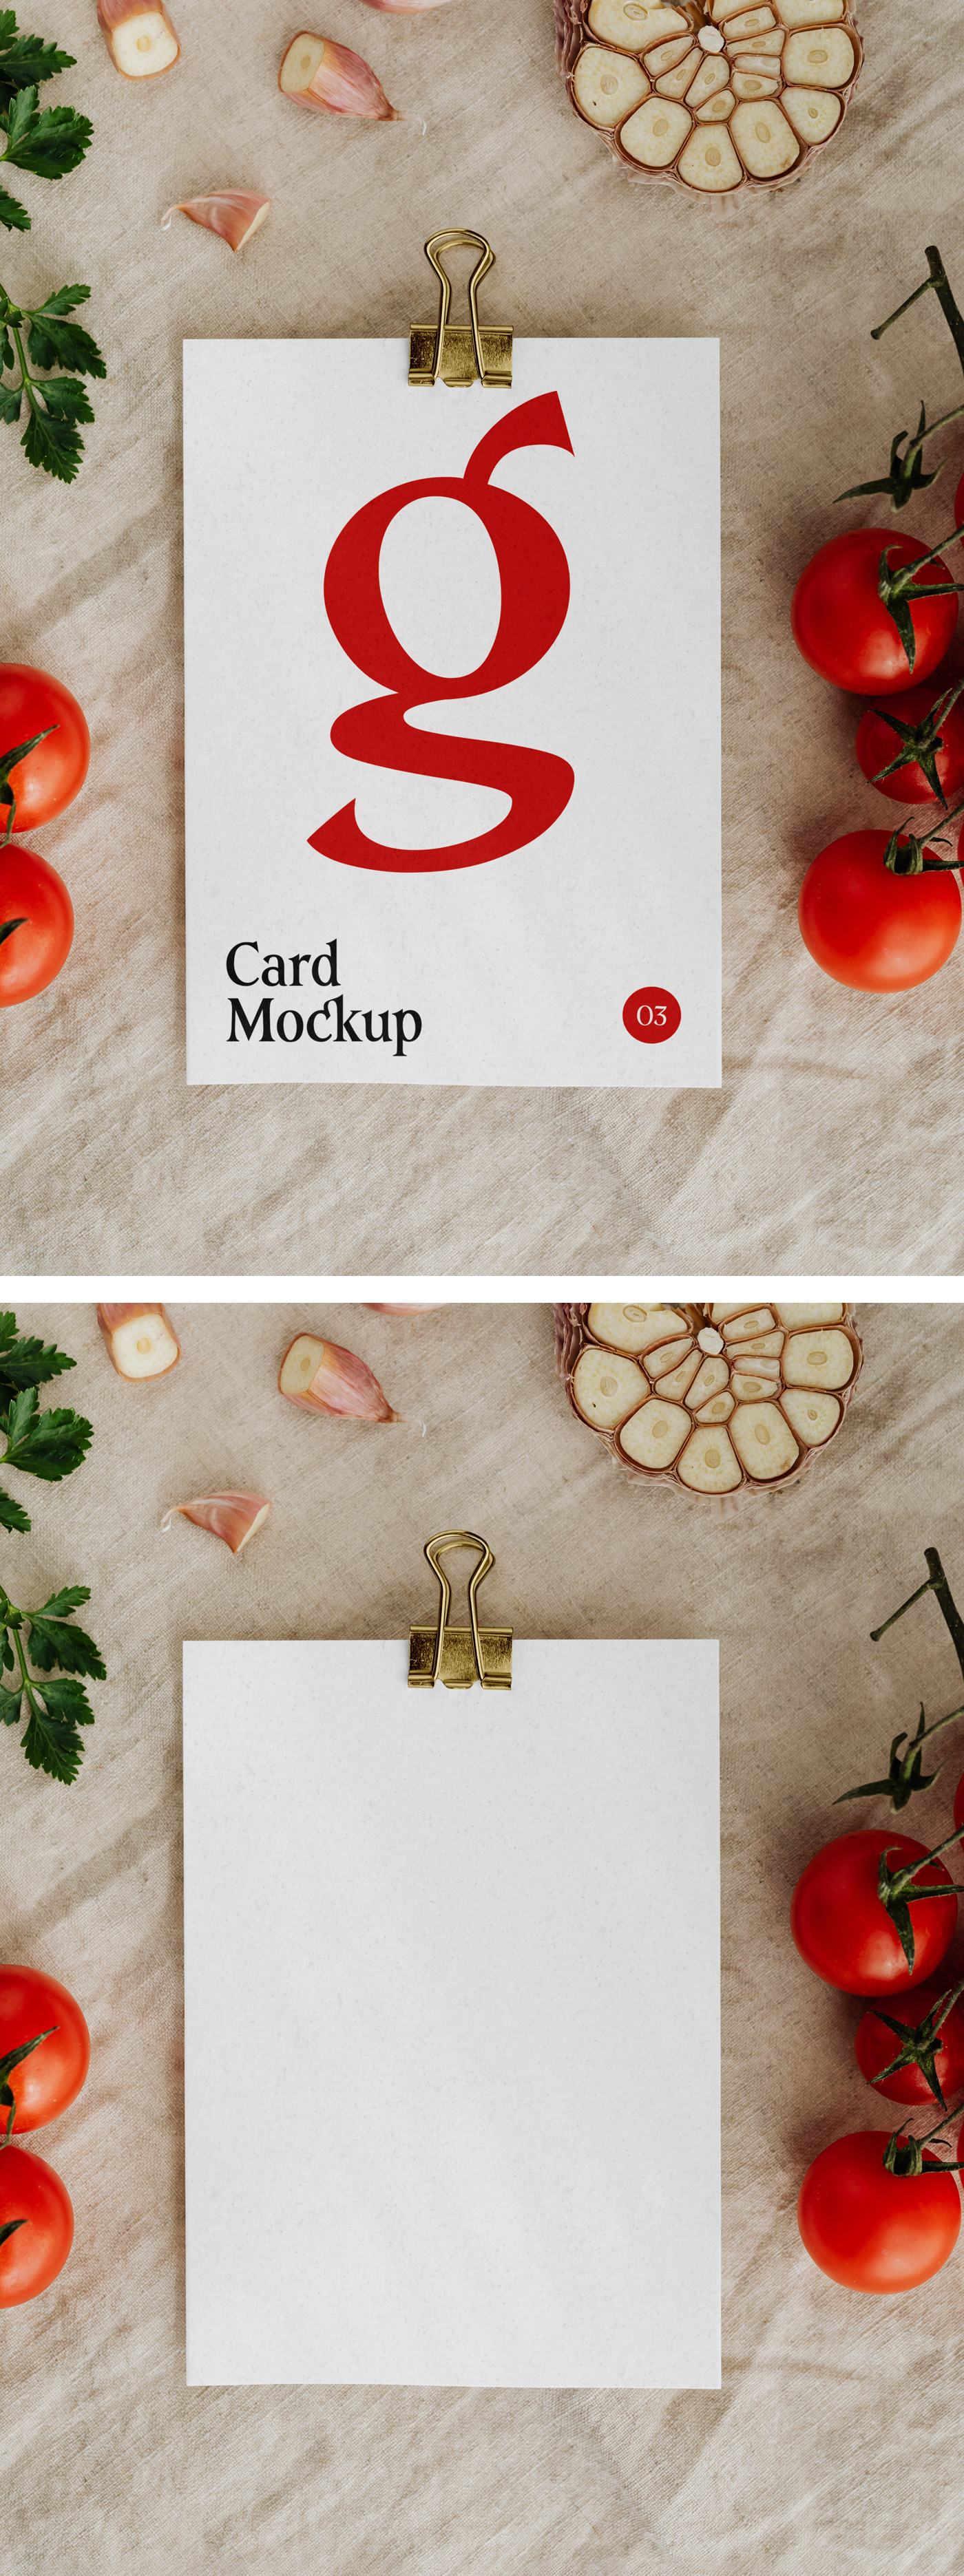 411 可商用餐饮菜单海报设计展示PSD样机素材 Card with Tomato Mockup Graphic yythk.zip